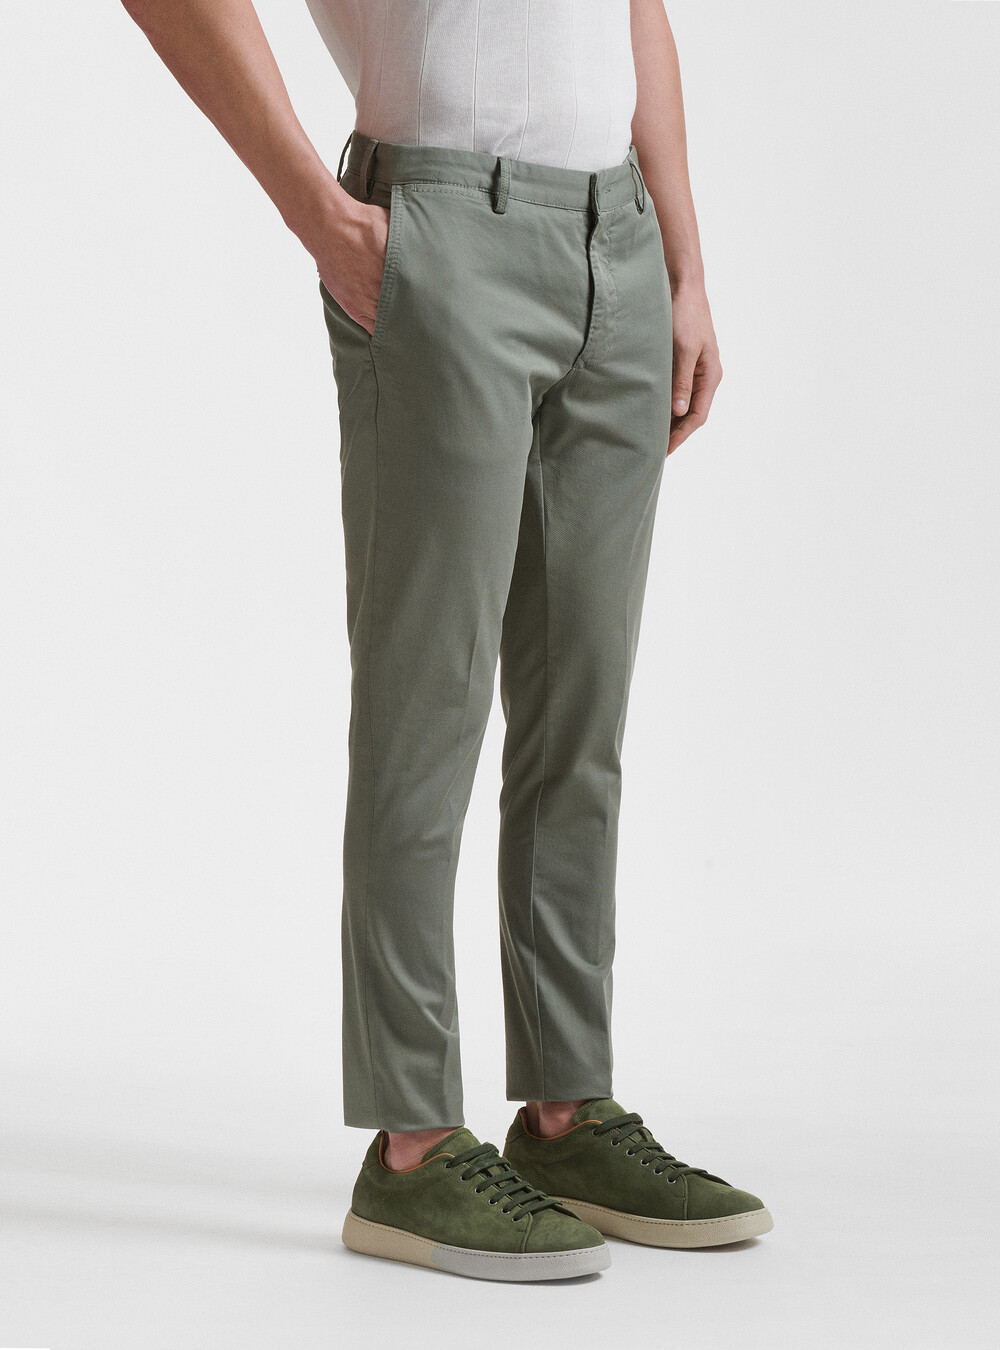 Garment-dyed stretch twill chino trousers, GutteridgeUS